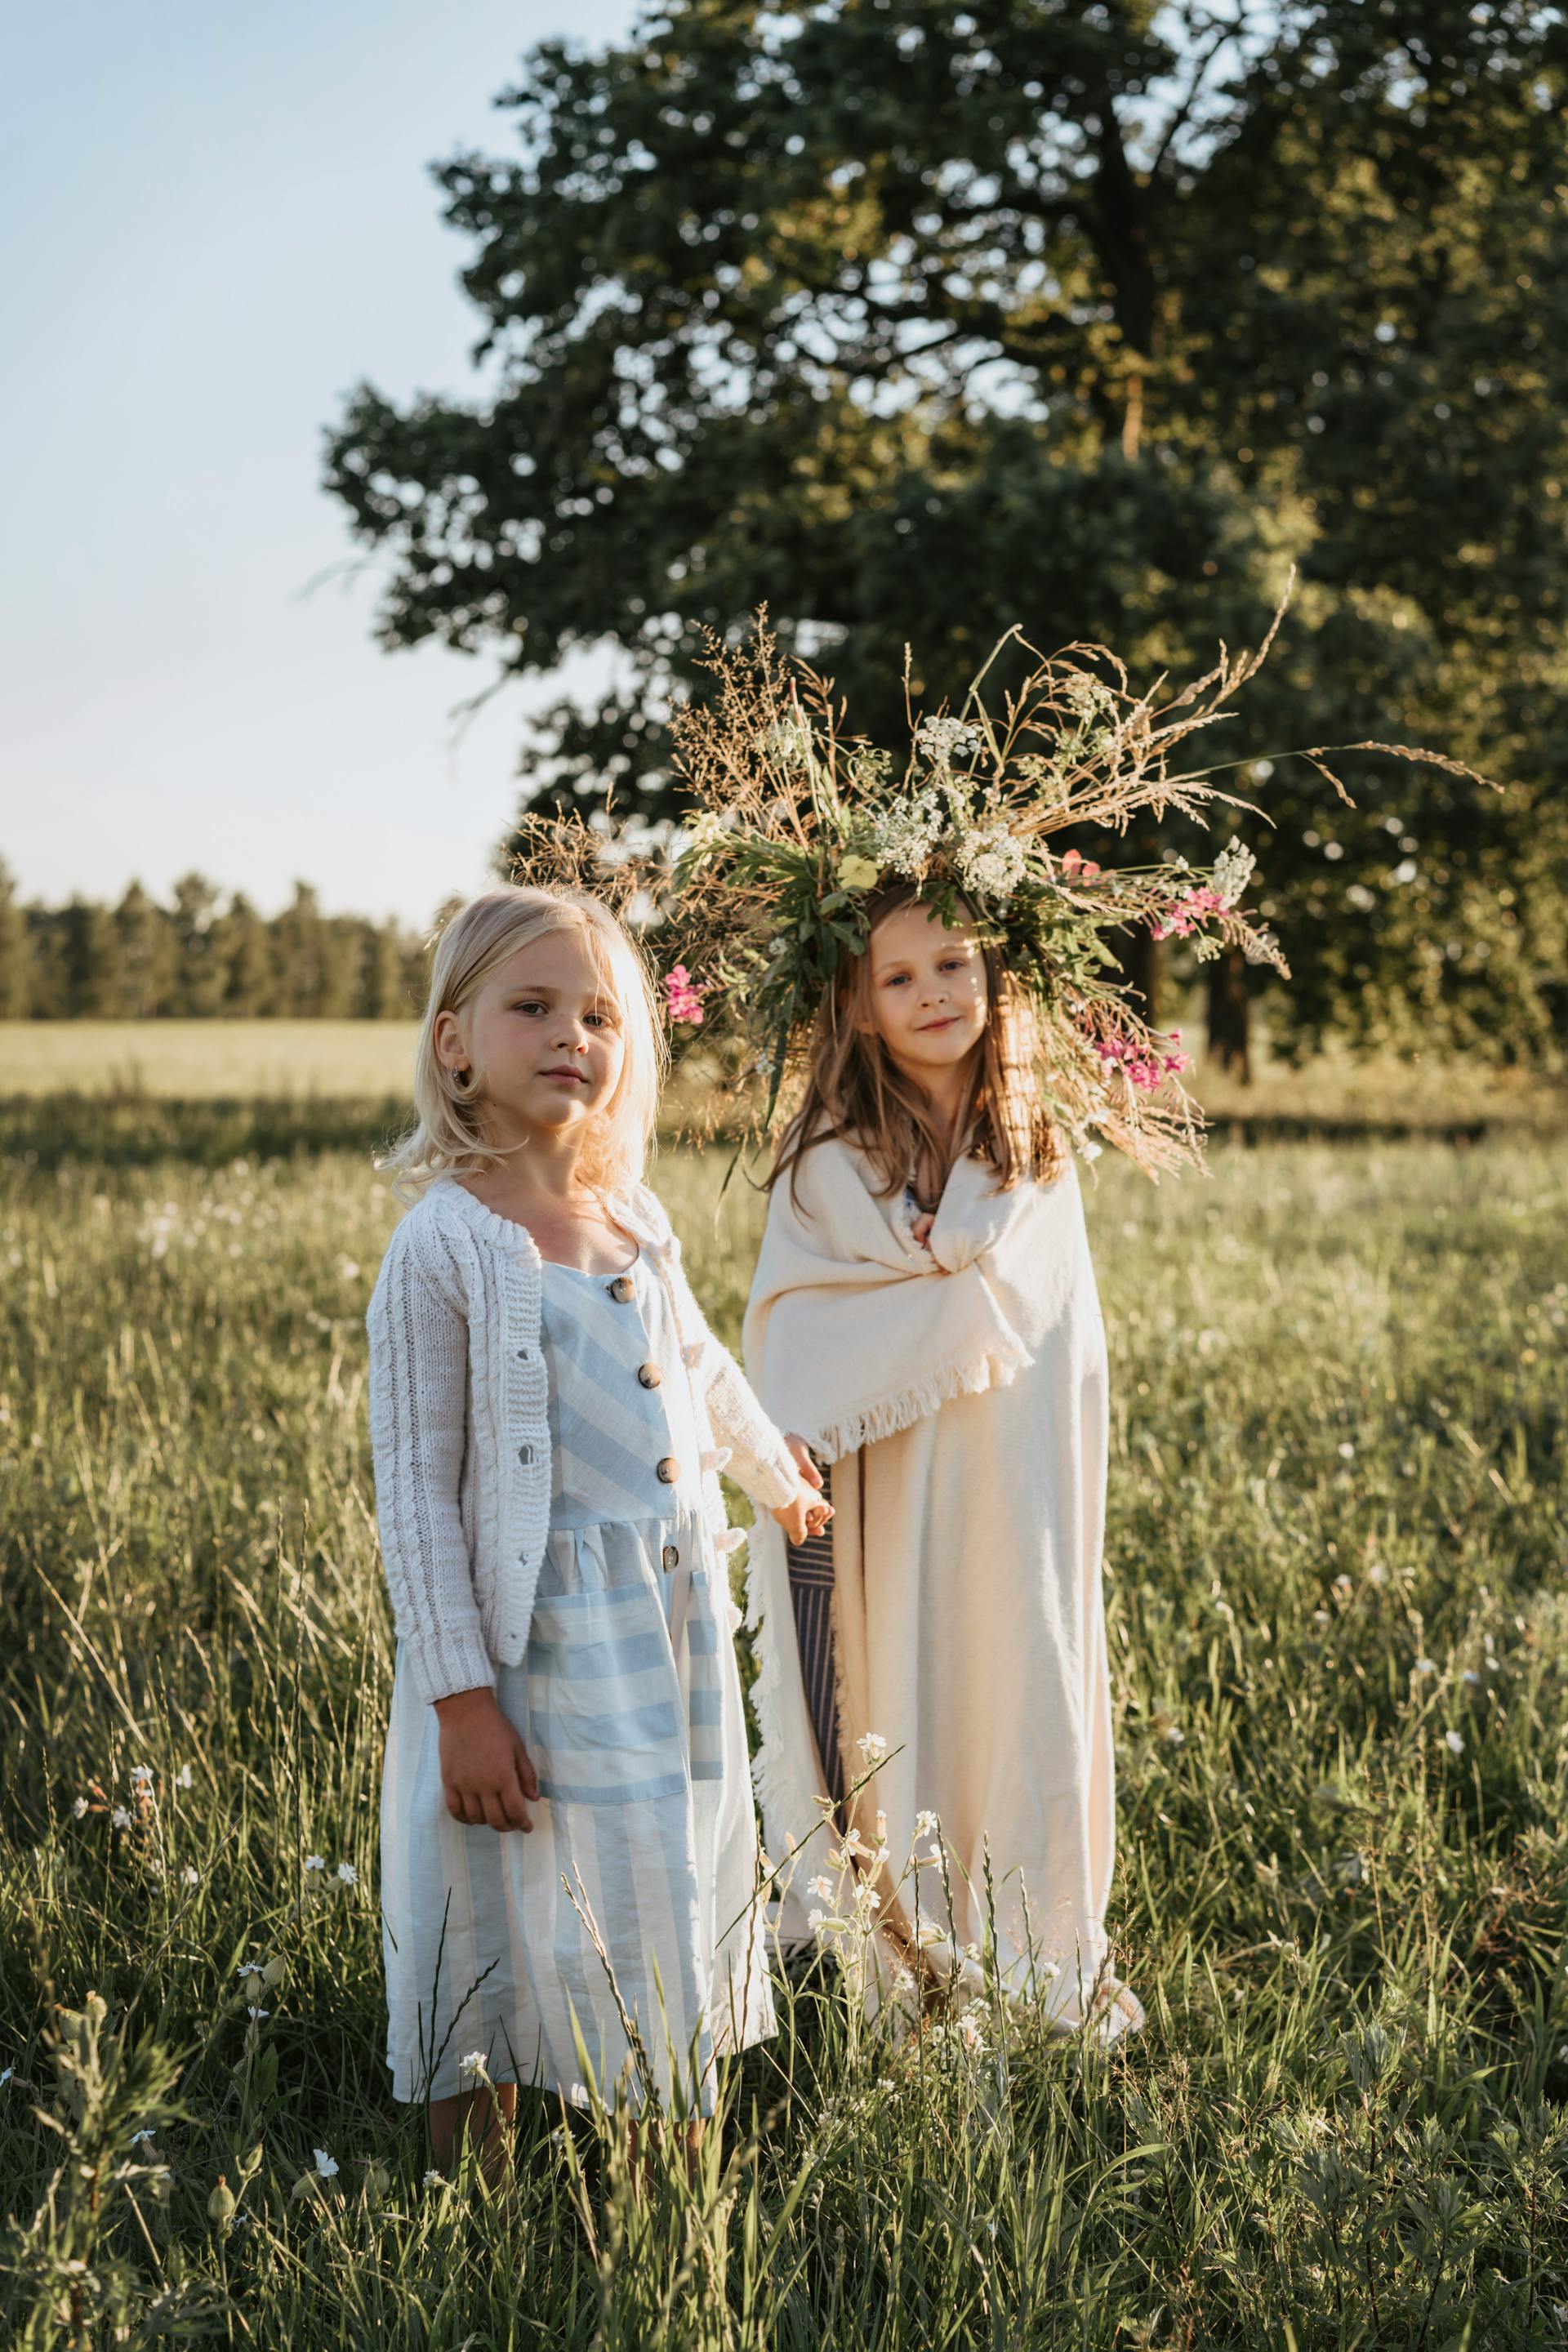 Two little girls outside | Source: Pexels